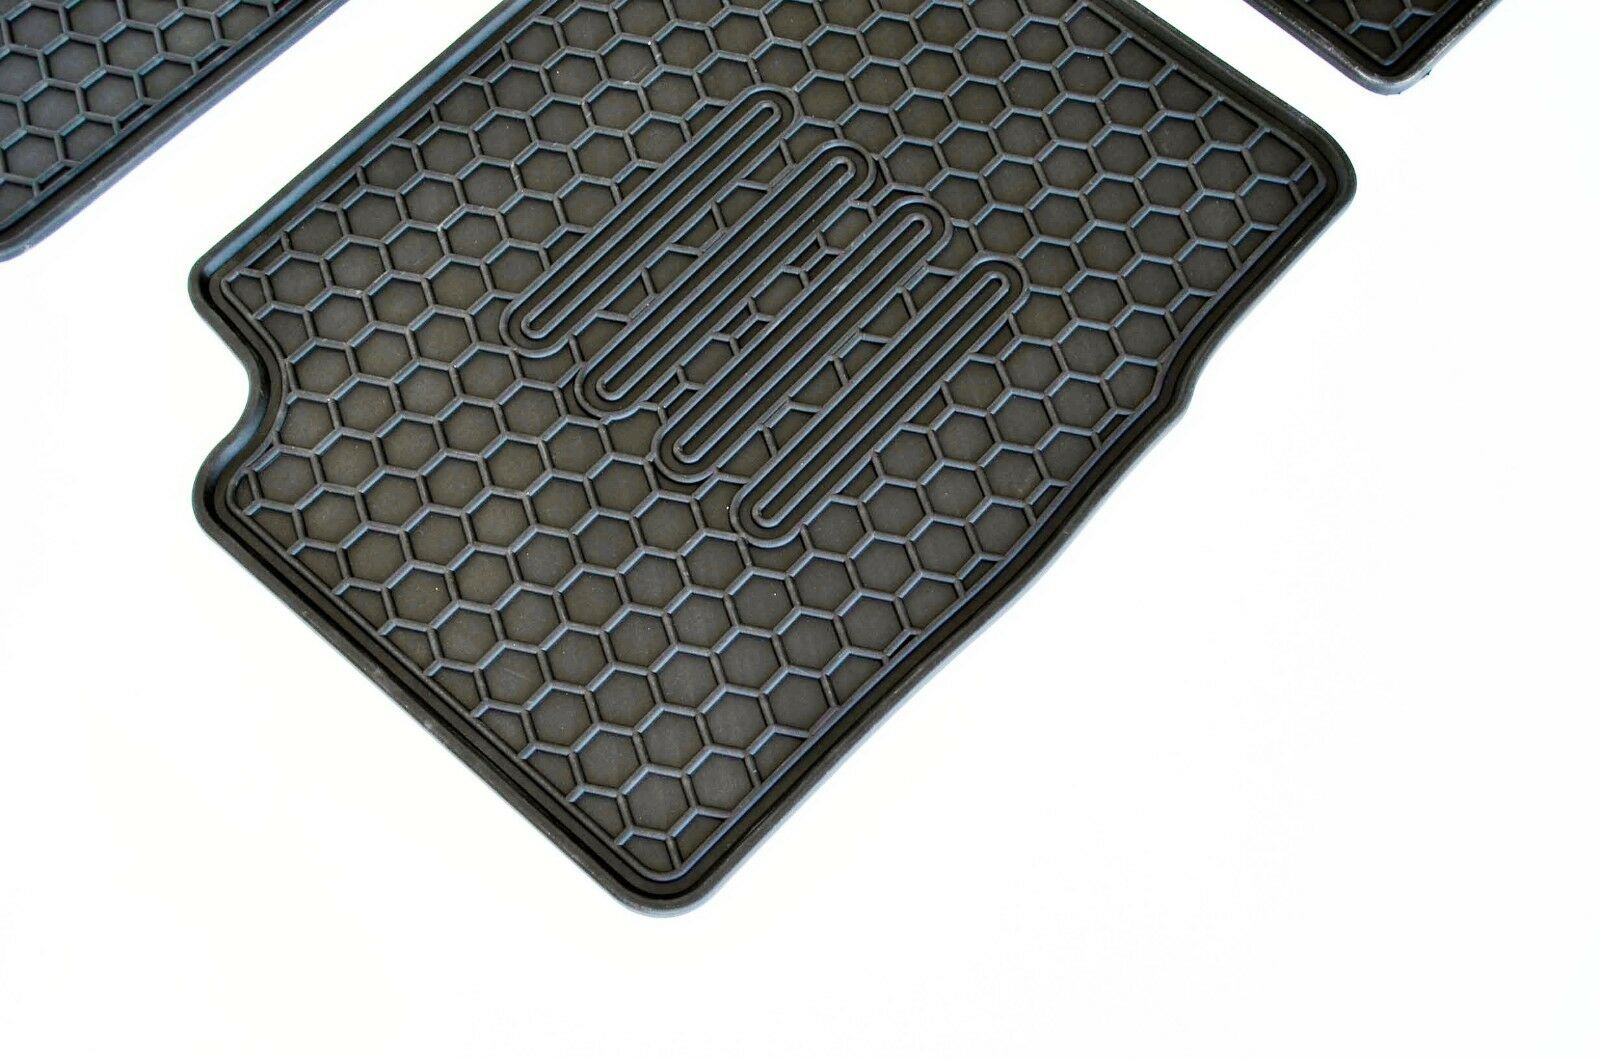 Car Mats For Hyundai ix35 Tailored Fit Black Rubber Floor Set 4 Pieces Anti-Slip Heavy-Duty & Waterproof